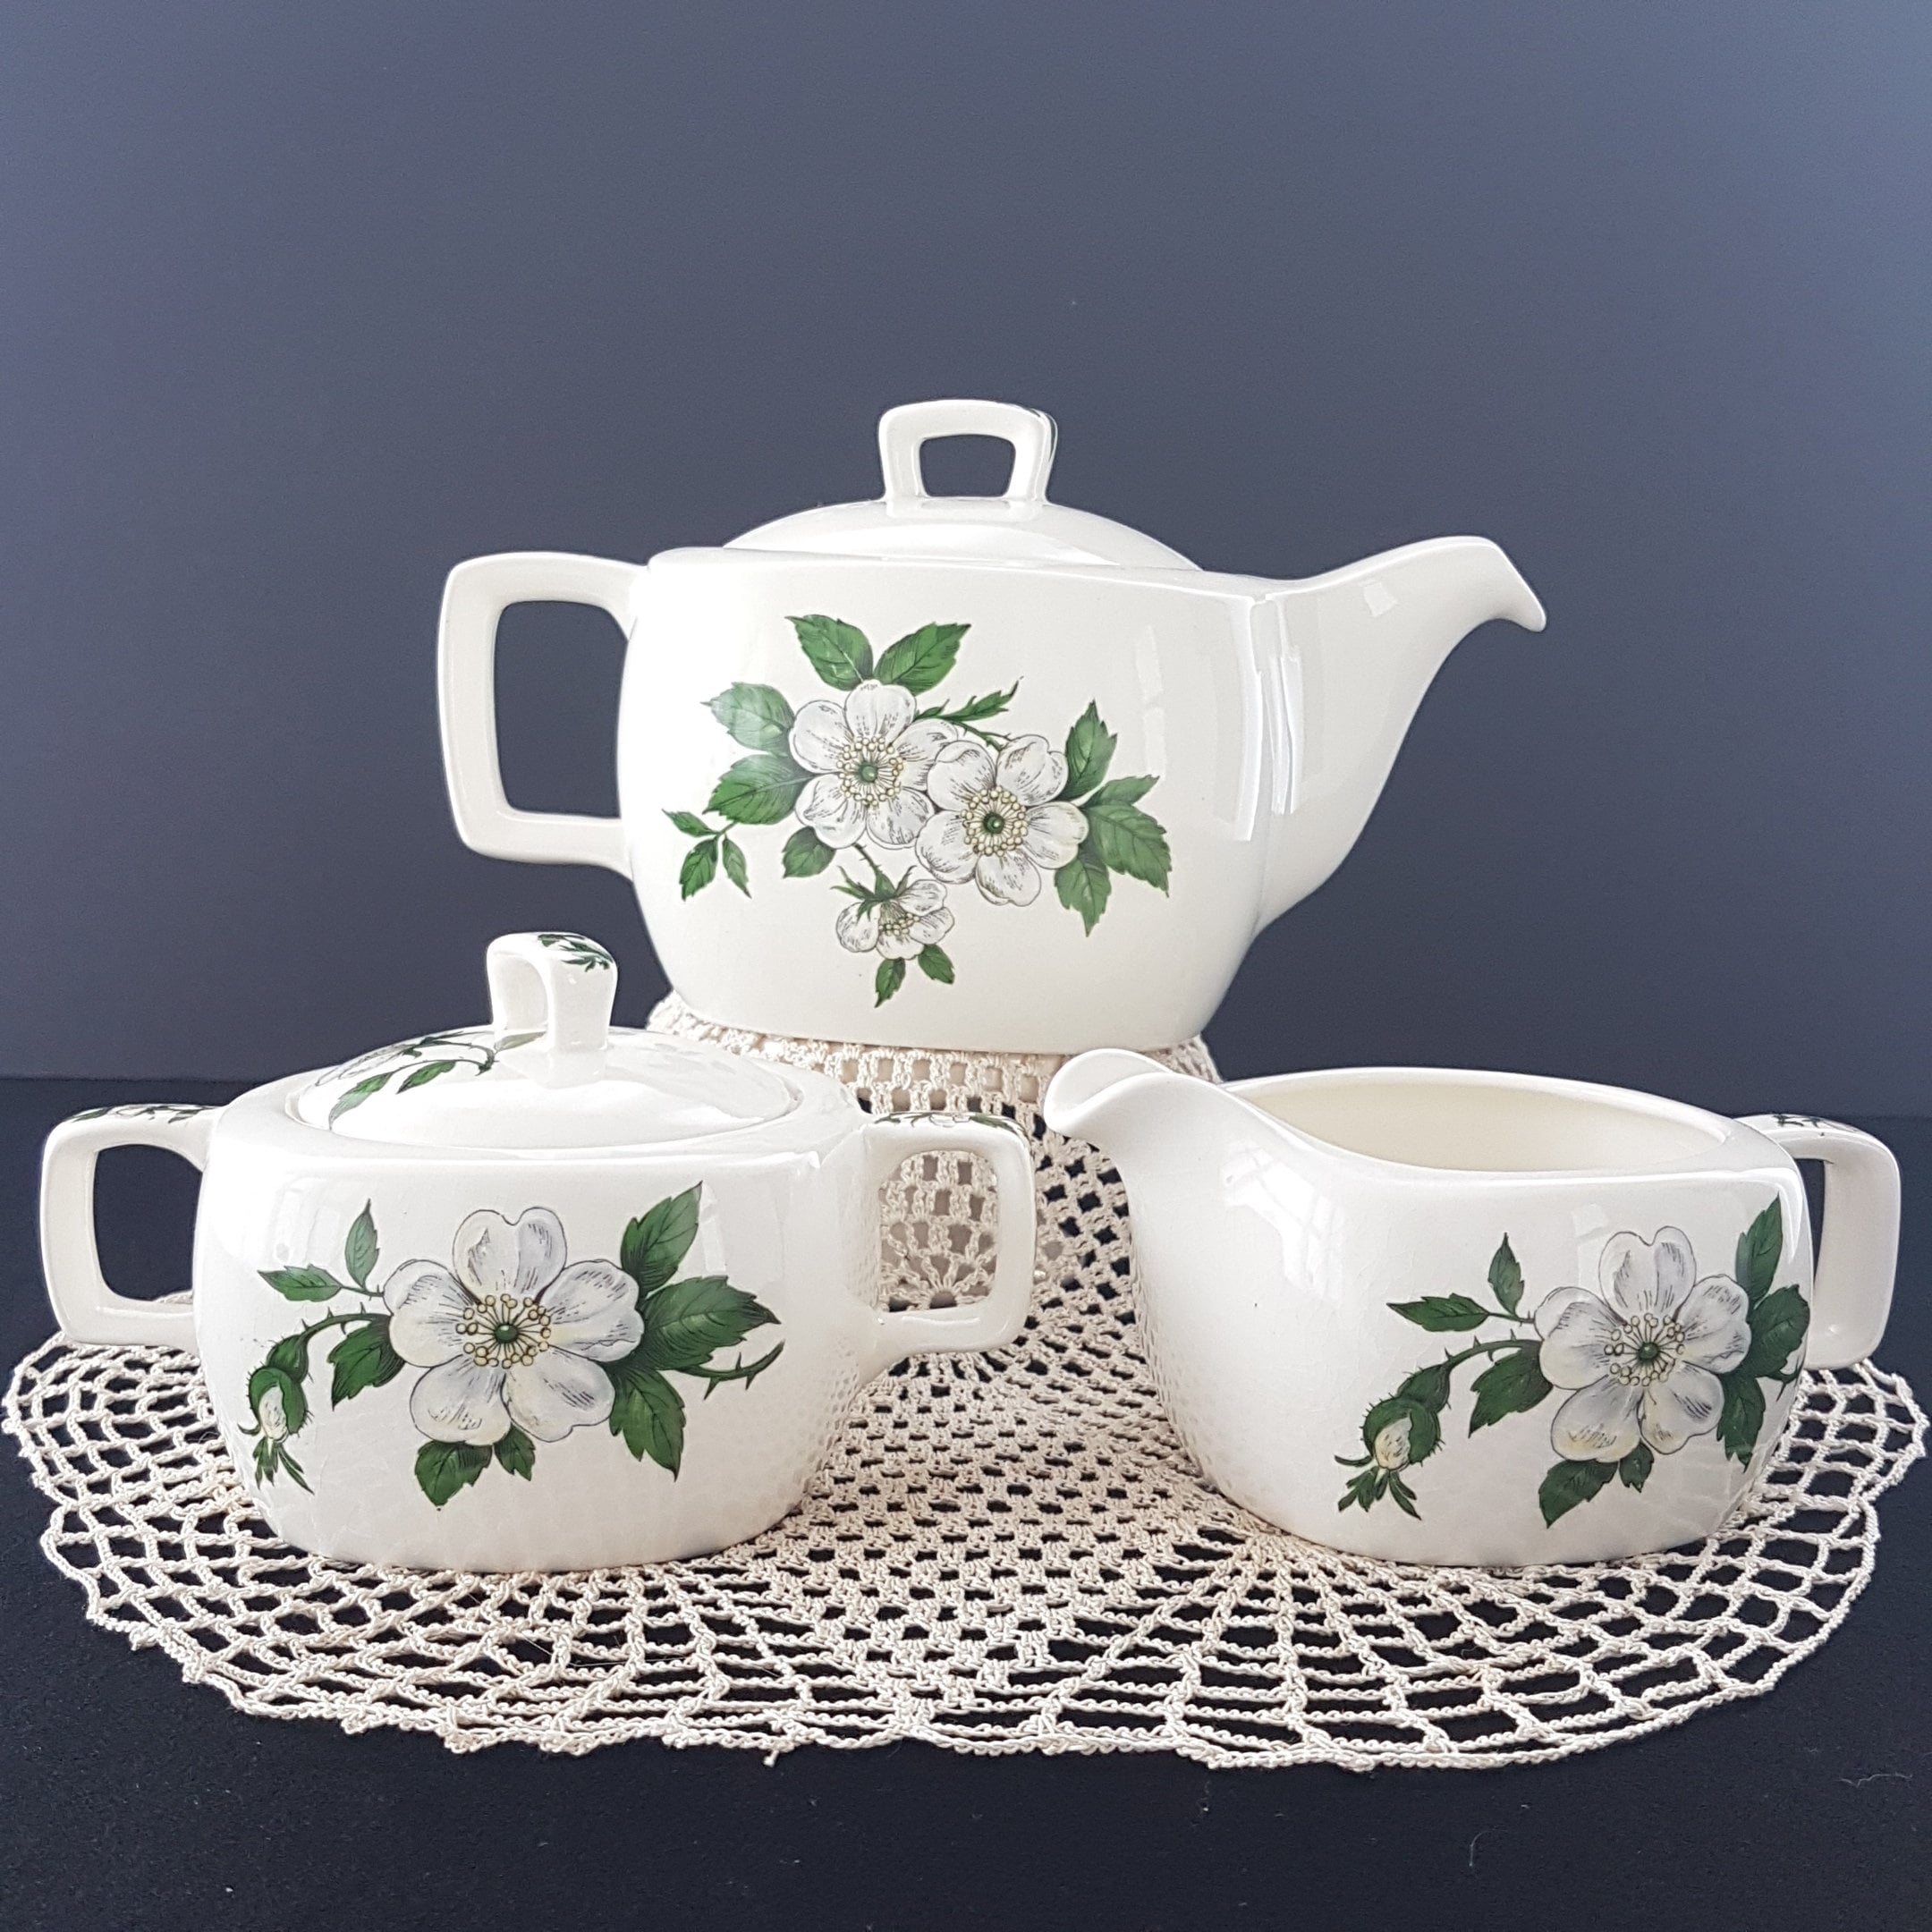 Dogwood Teapot - Tea and Whimsey